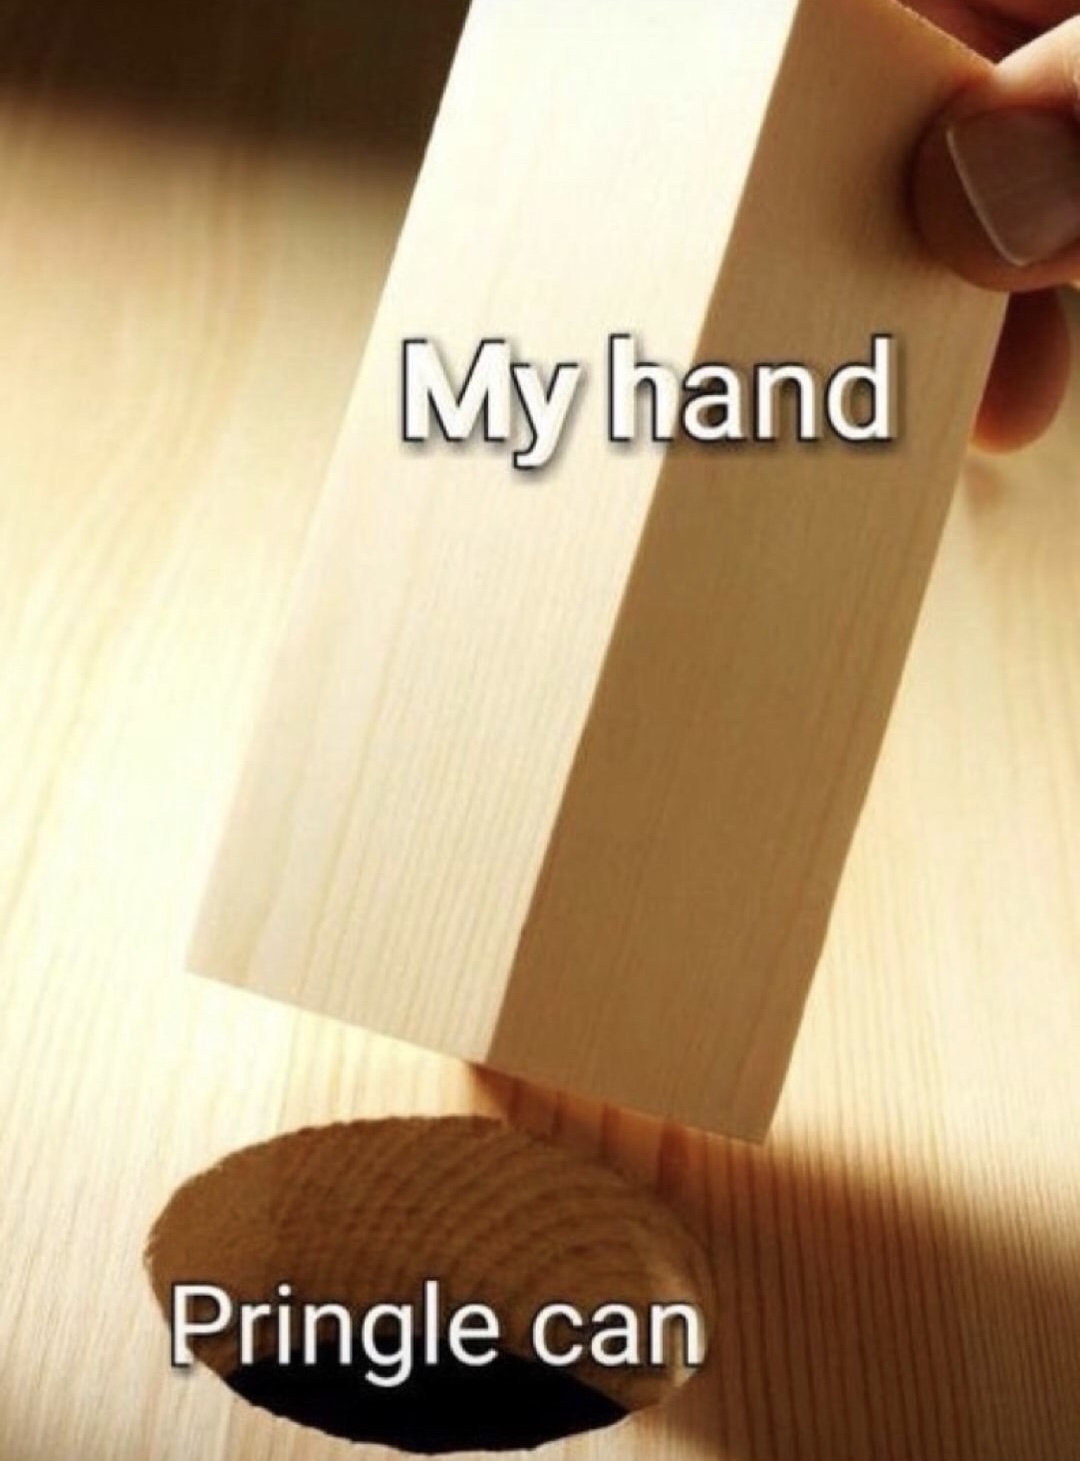 memes - wood - My hand Pringle can